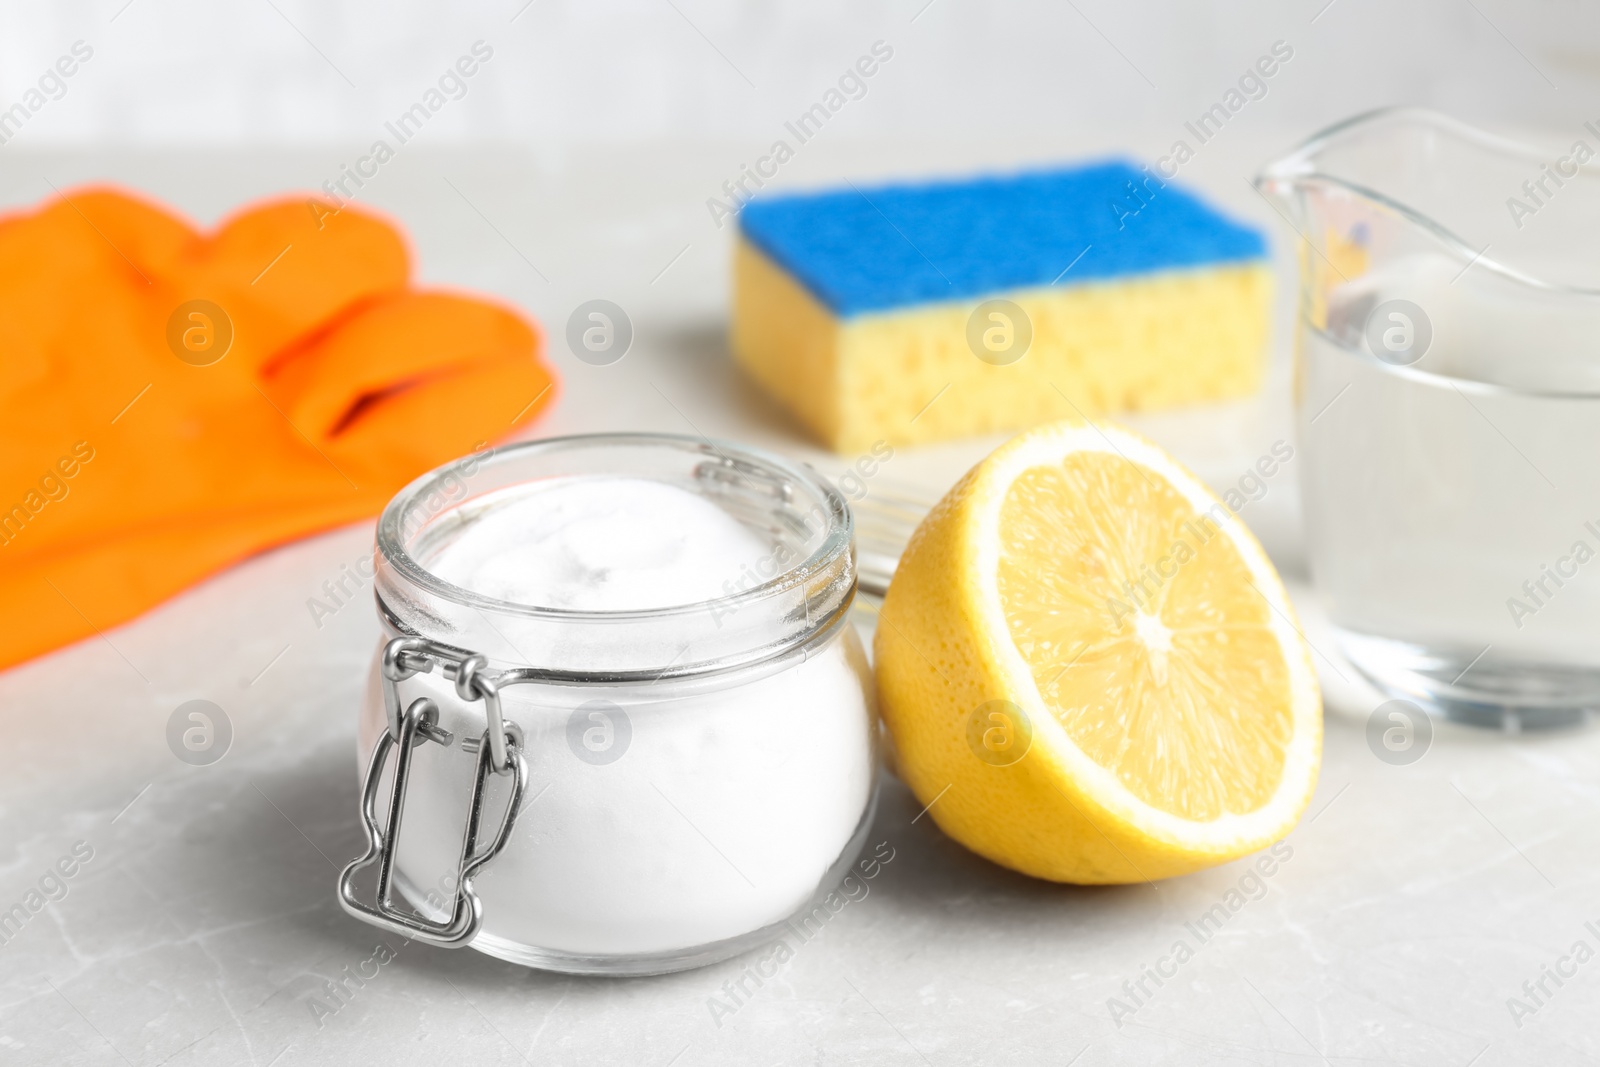 Photo of Baking soda and cut lemon on light grey table